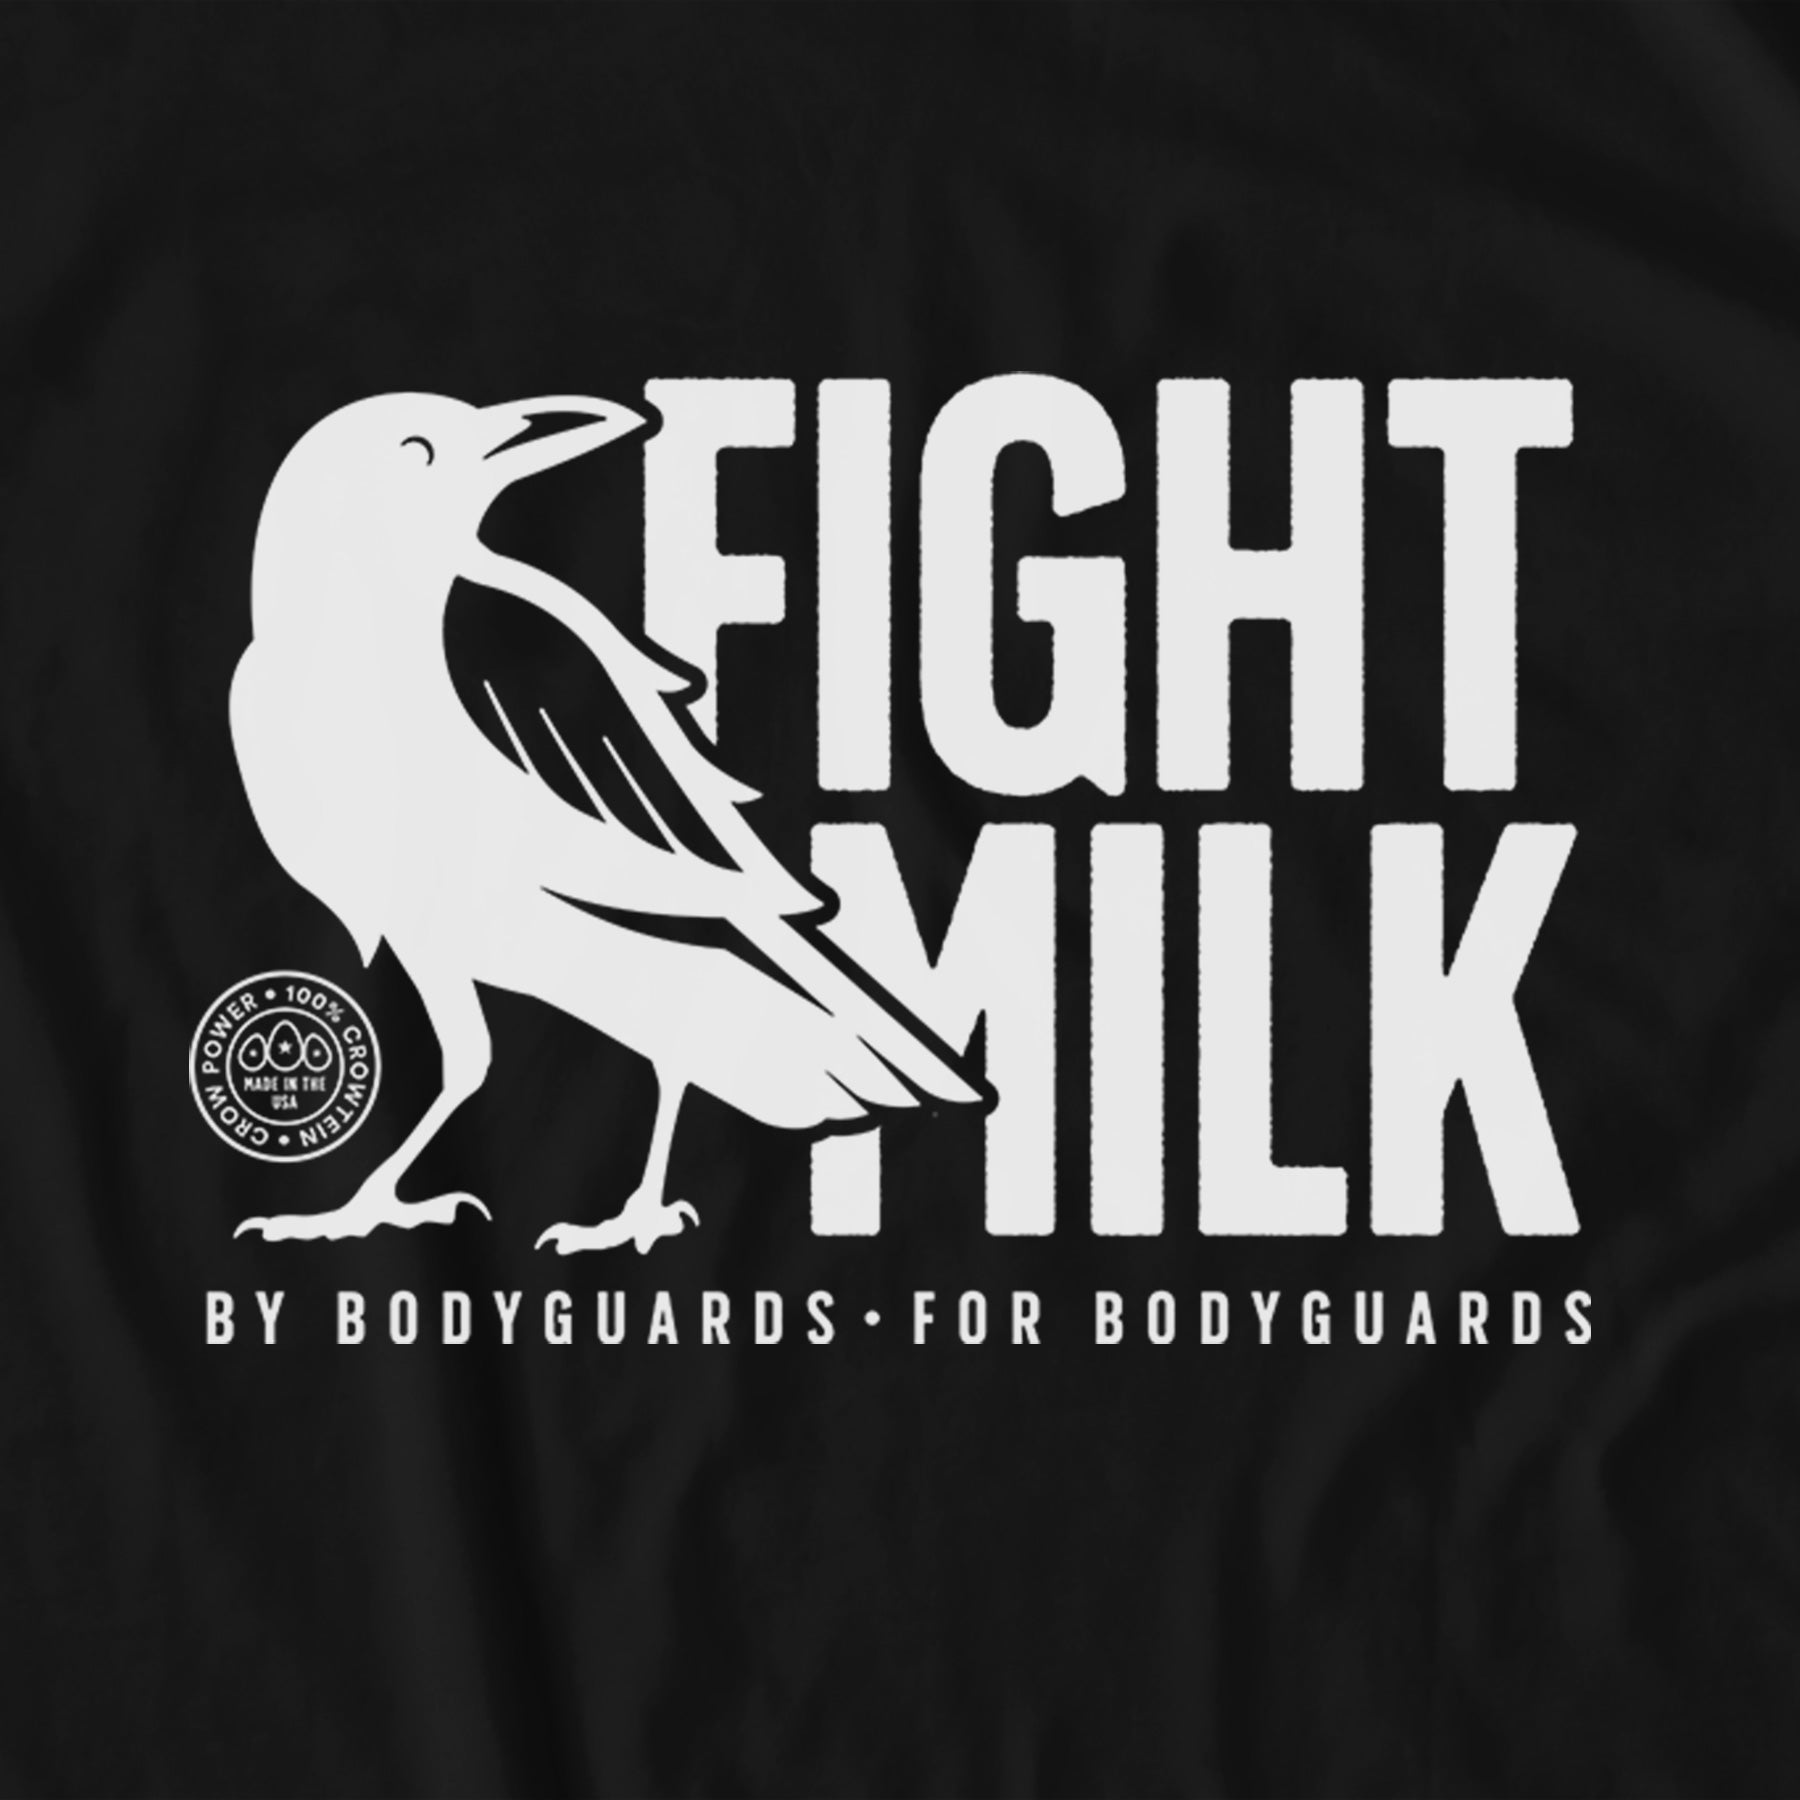 Fight Milk BBFB T-Shirt - Black